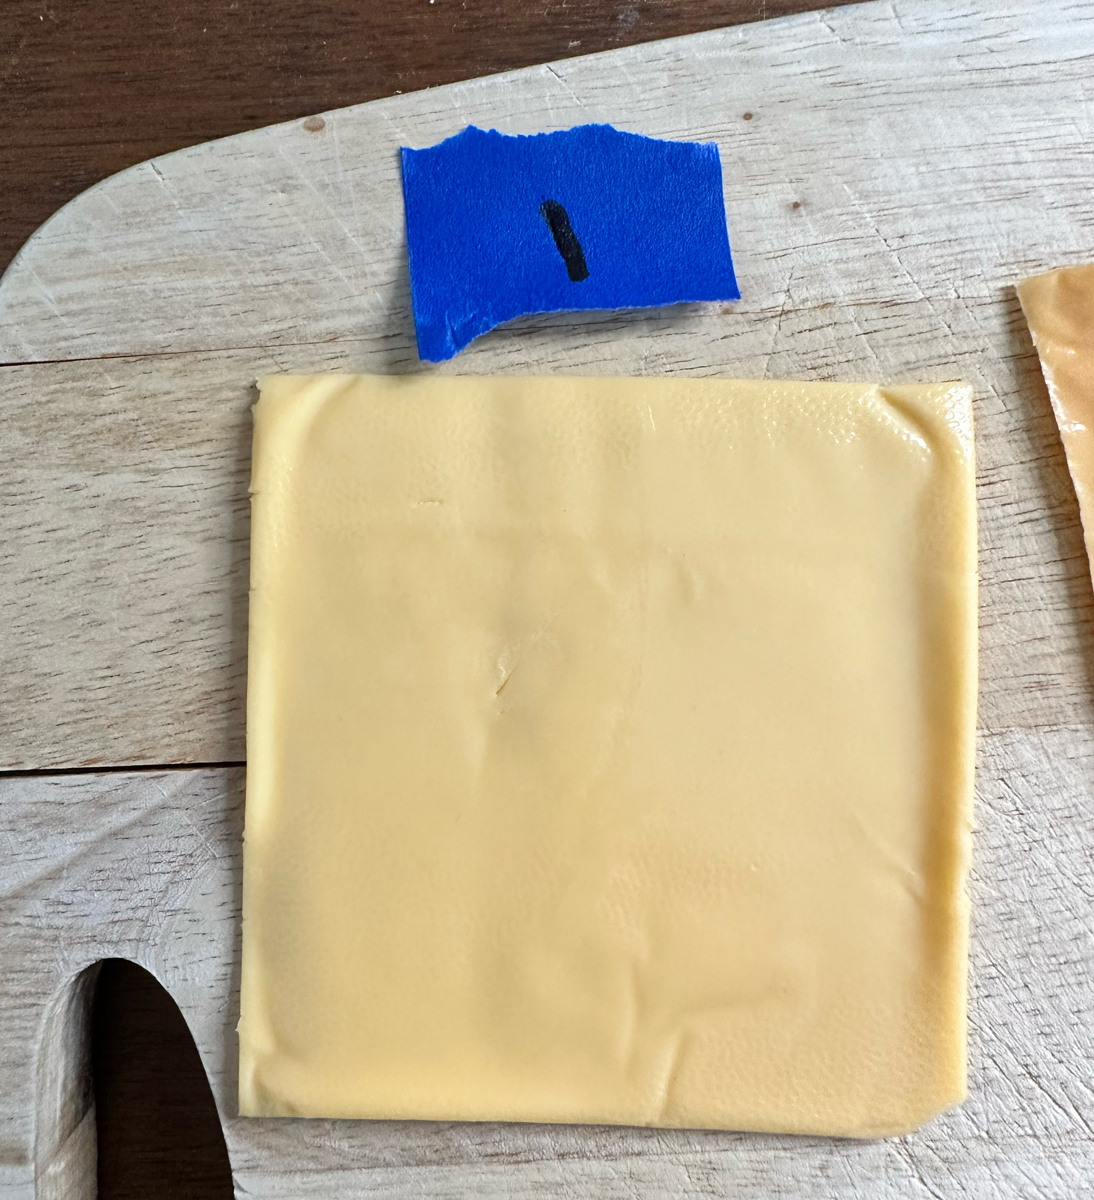 Sample 1 American Cheese